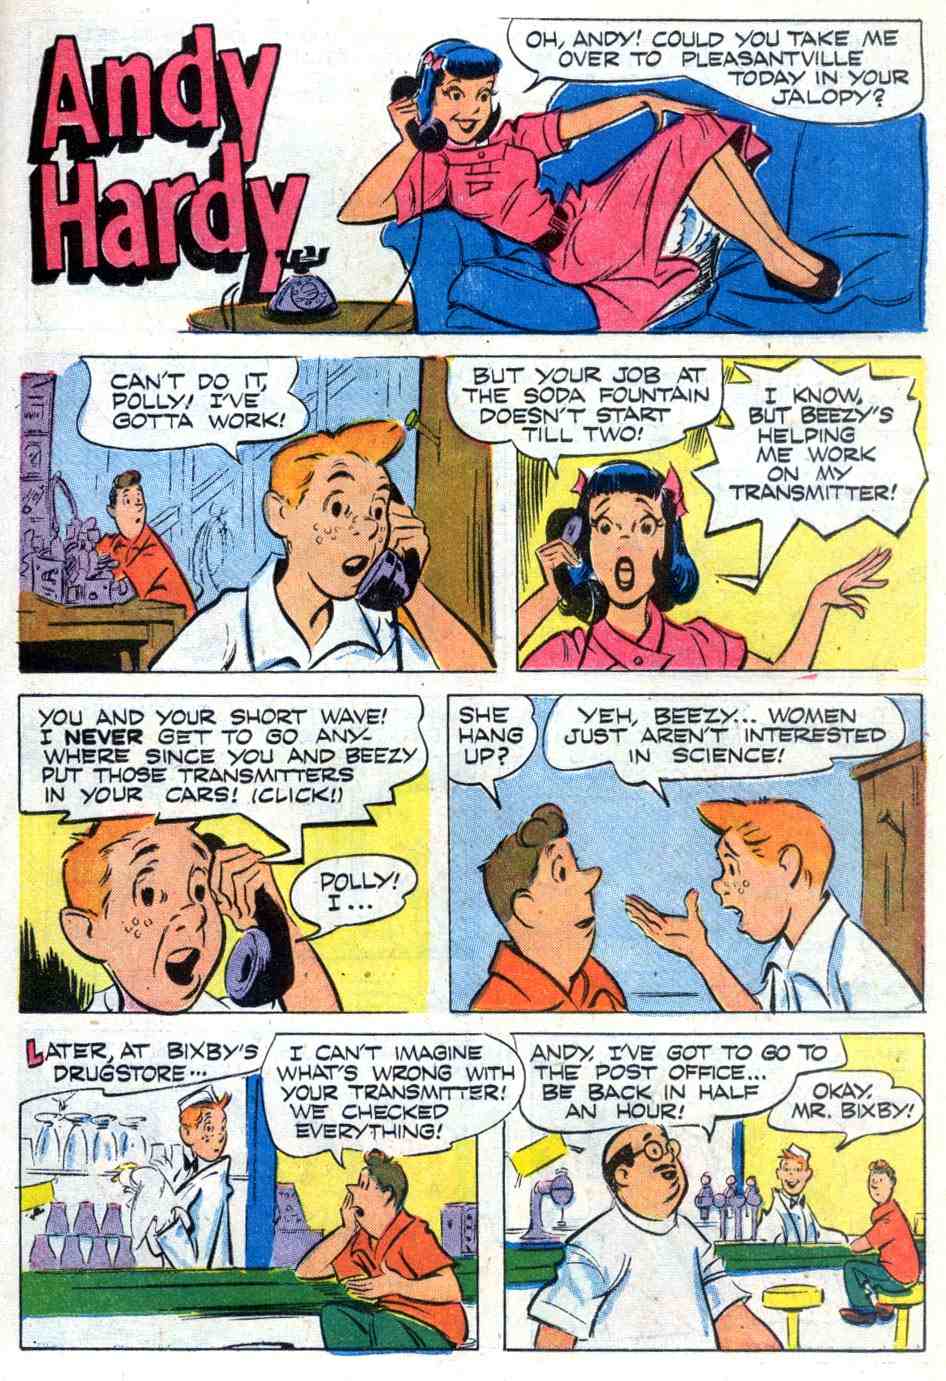 Andy-Hardy-Comic-Strips (15)